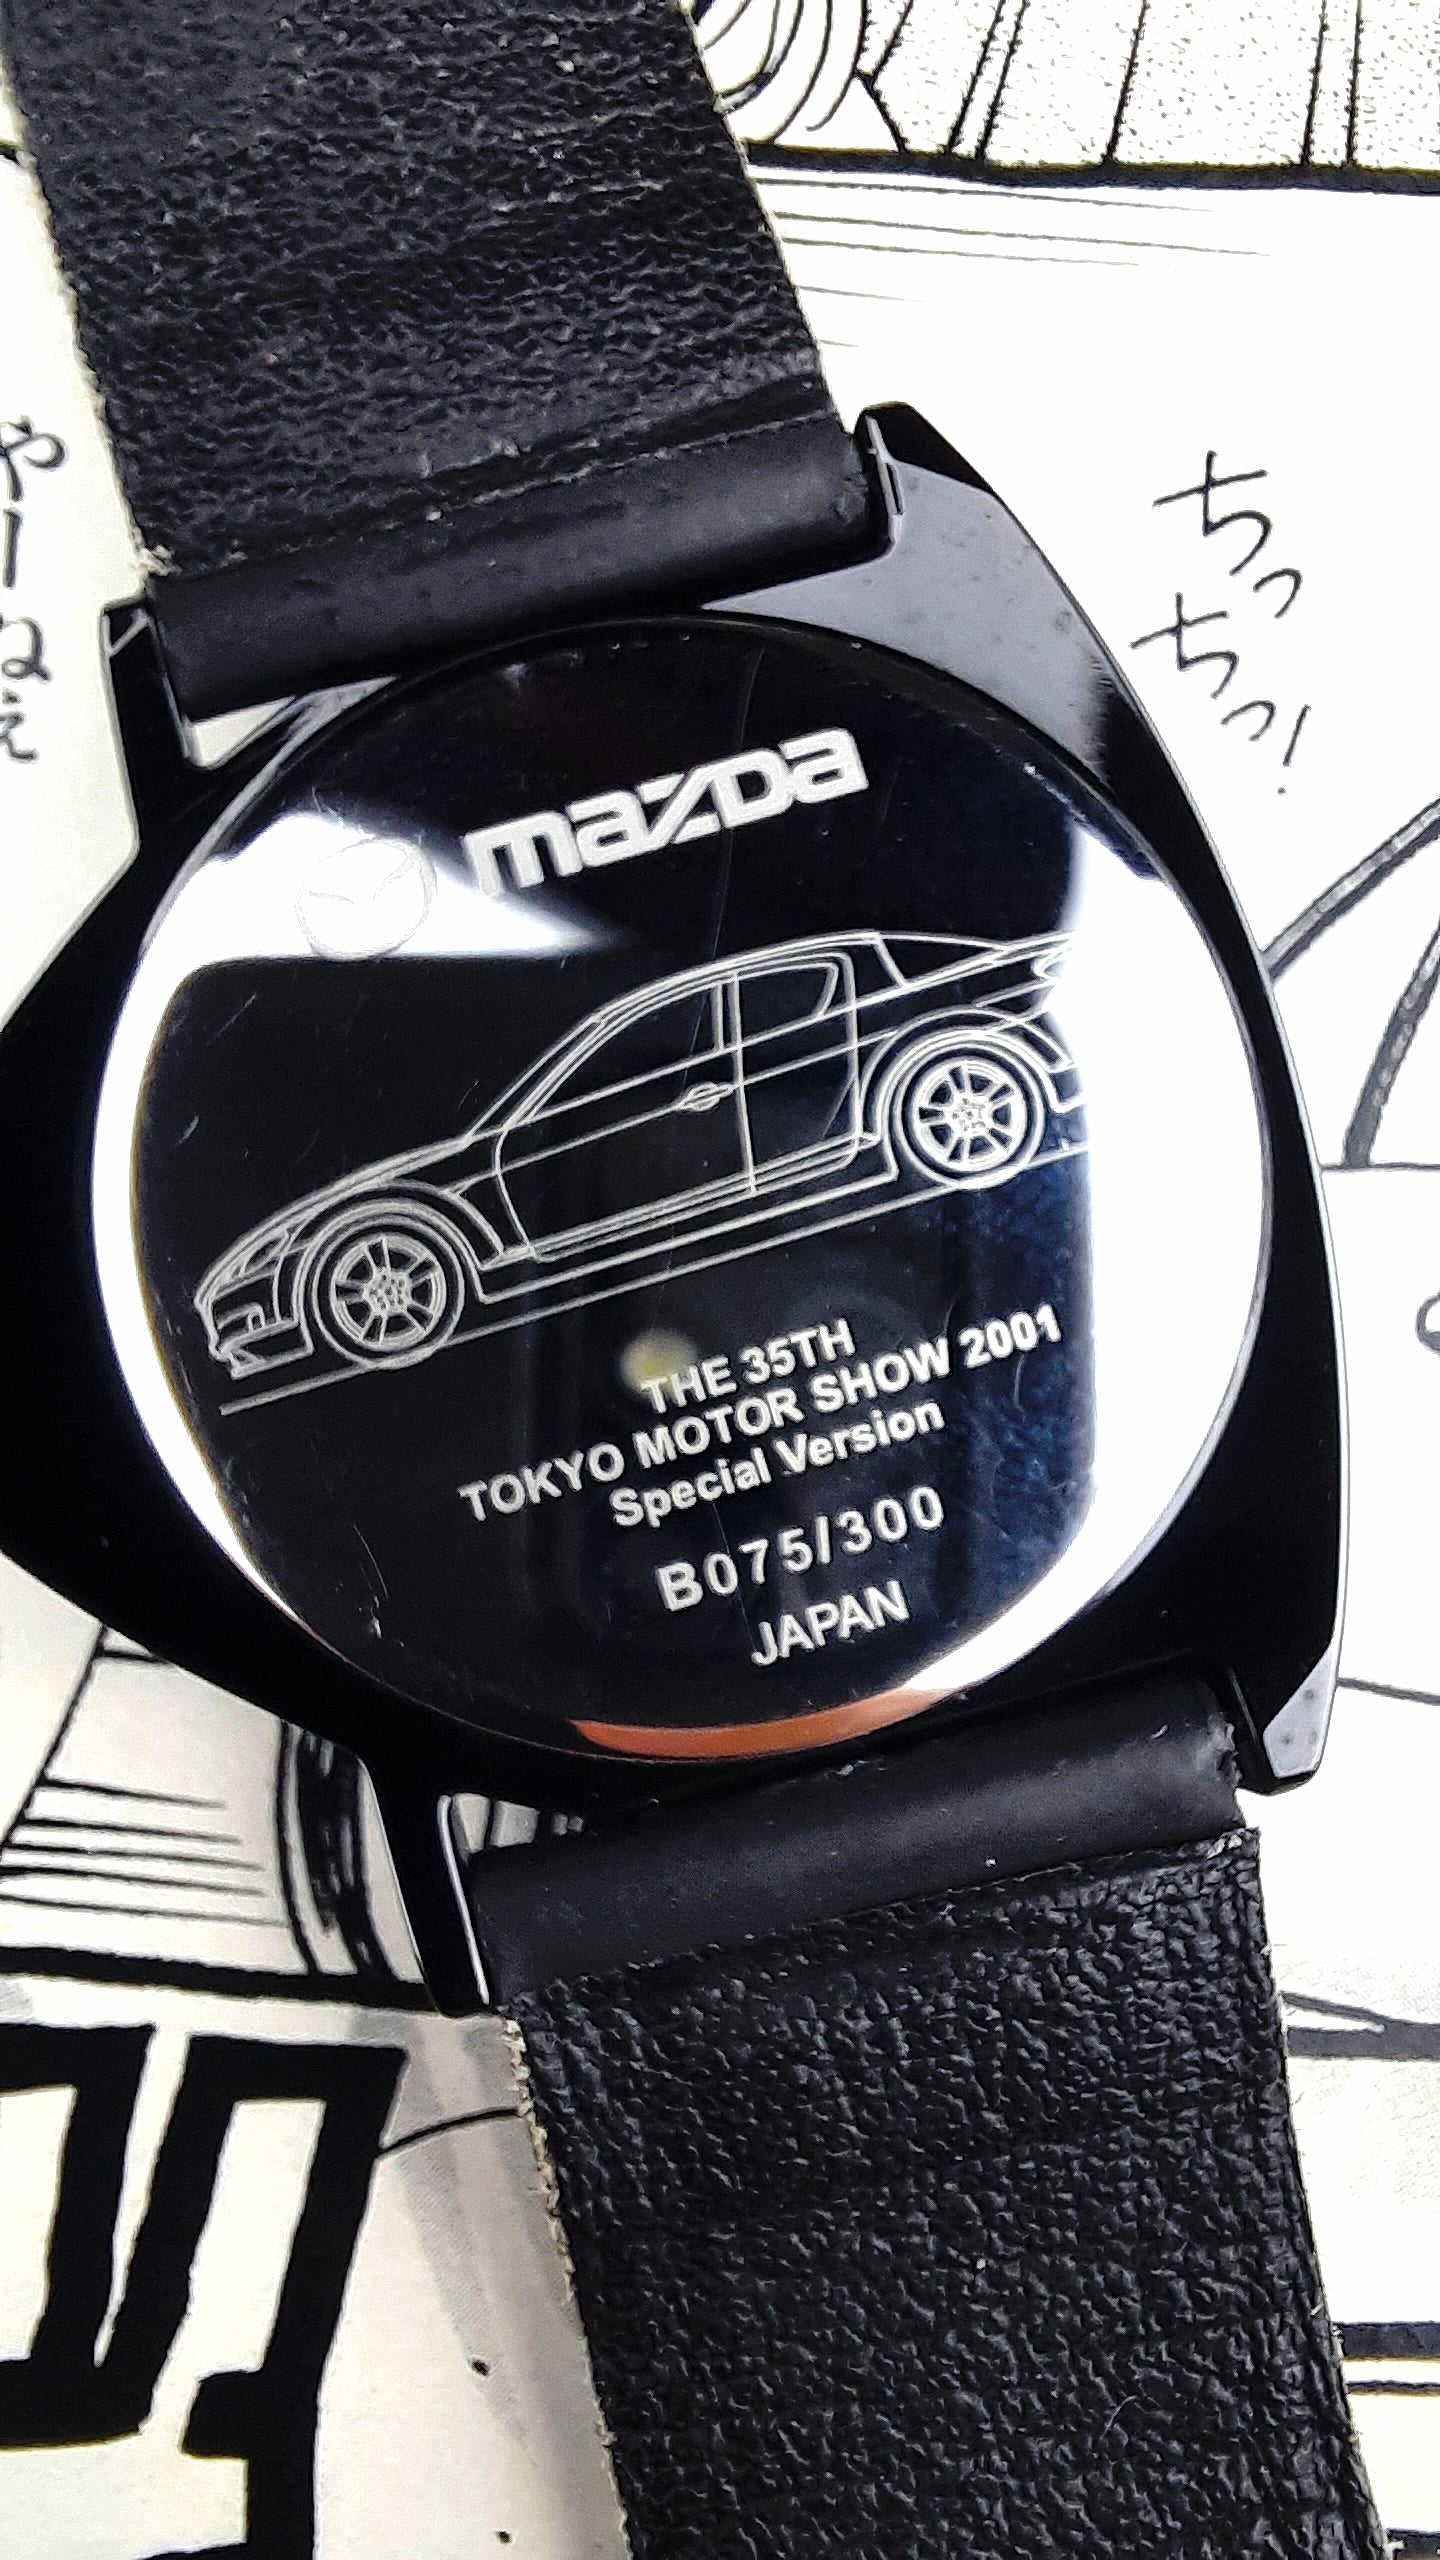 Watch - Mazda - rotary engine limited edition - 1995-2005 - Catawiki